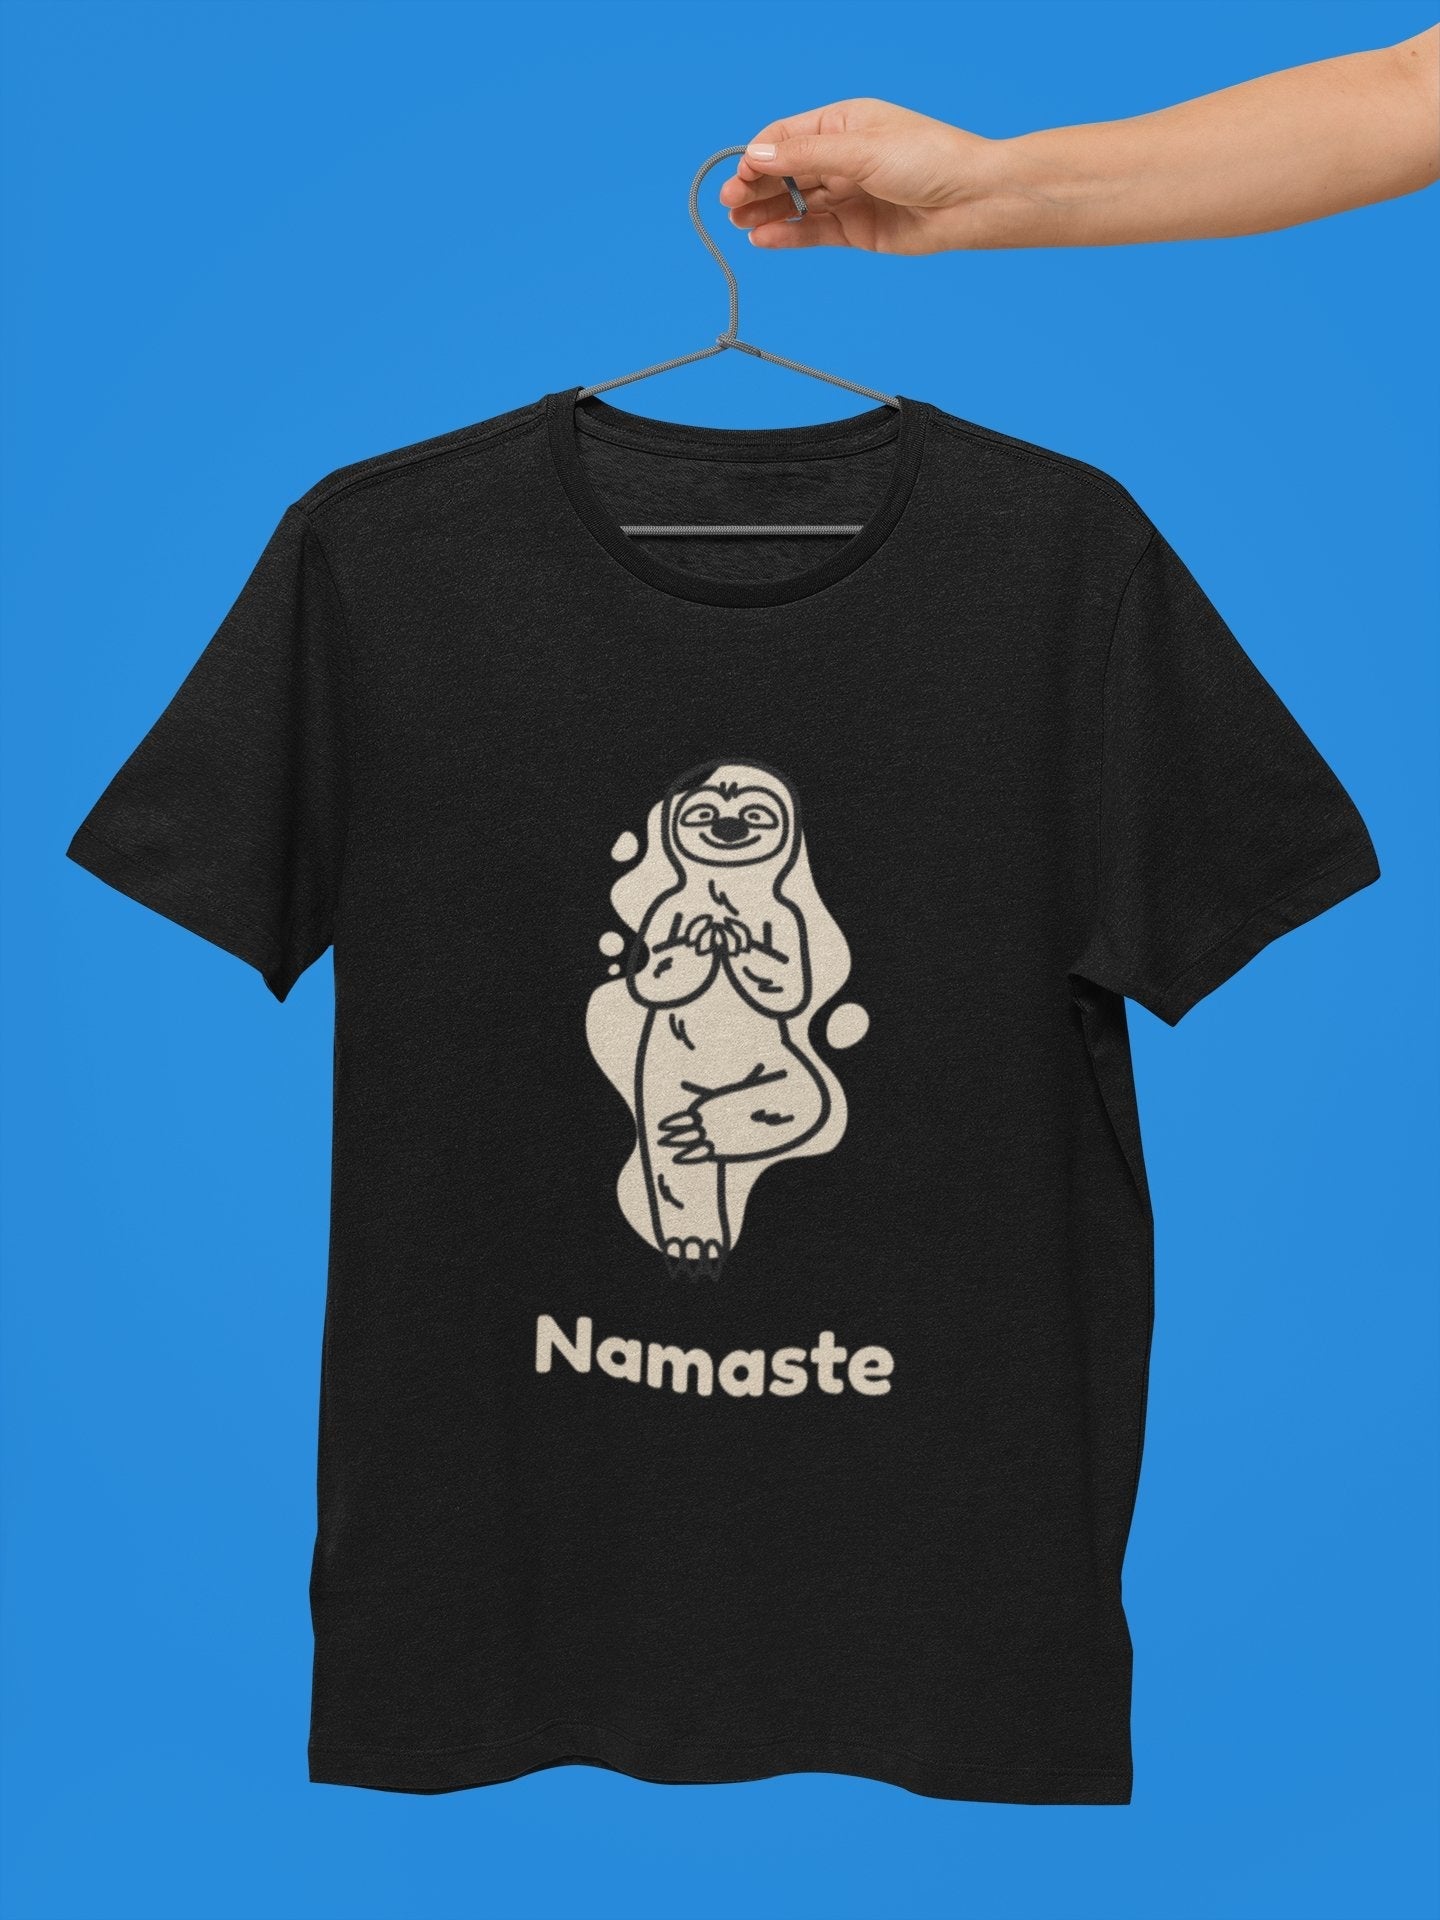 thelegalgang,Sloth doing Yoga Namaste design Yoga T shirt for Men,MEN.